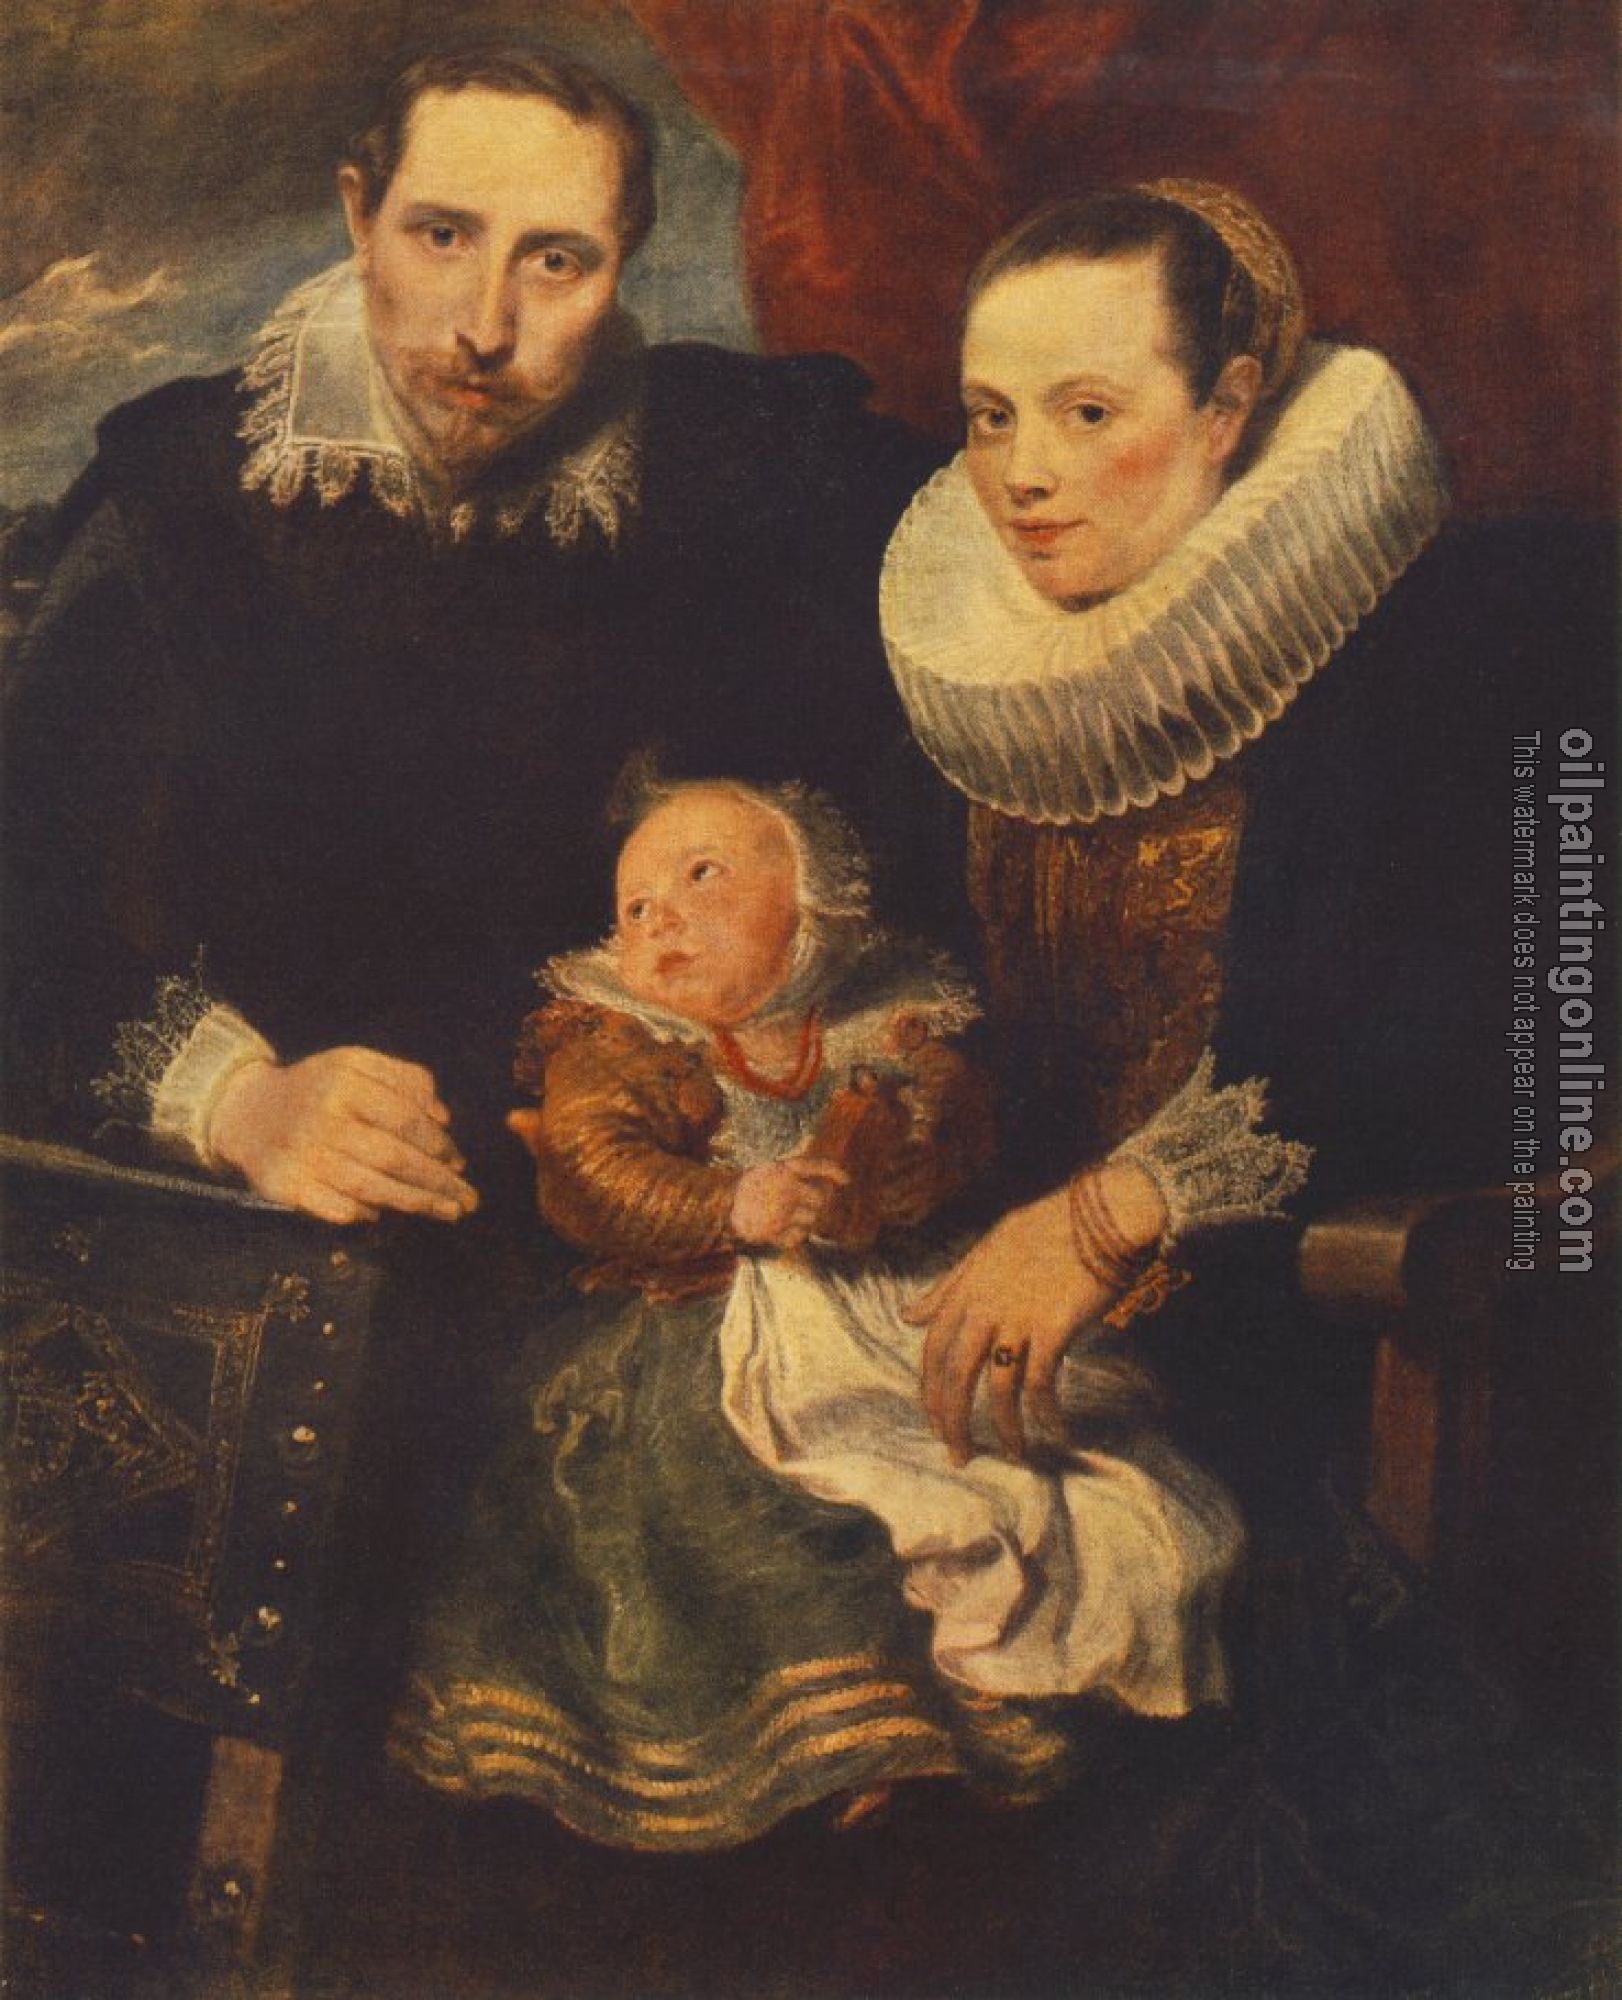 Dyck, Anthony van - Family Portrait